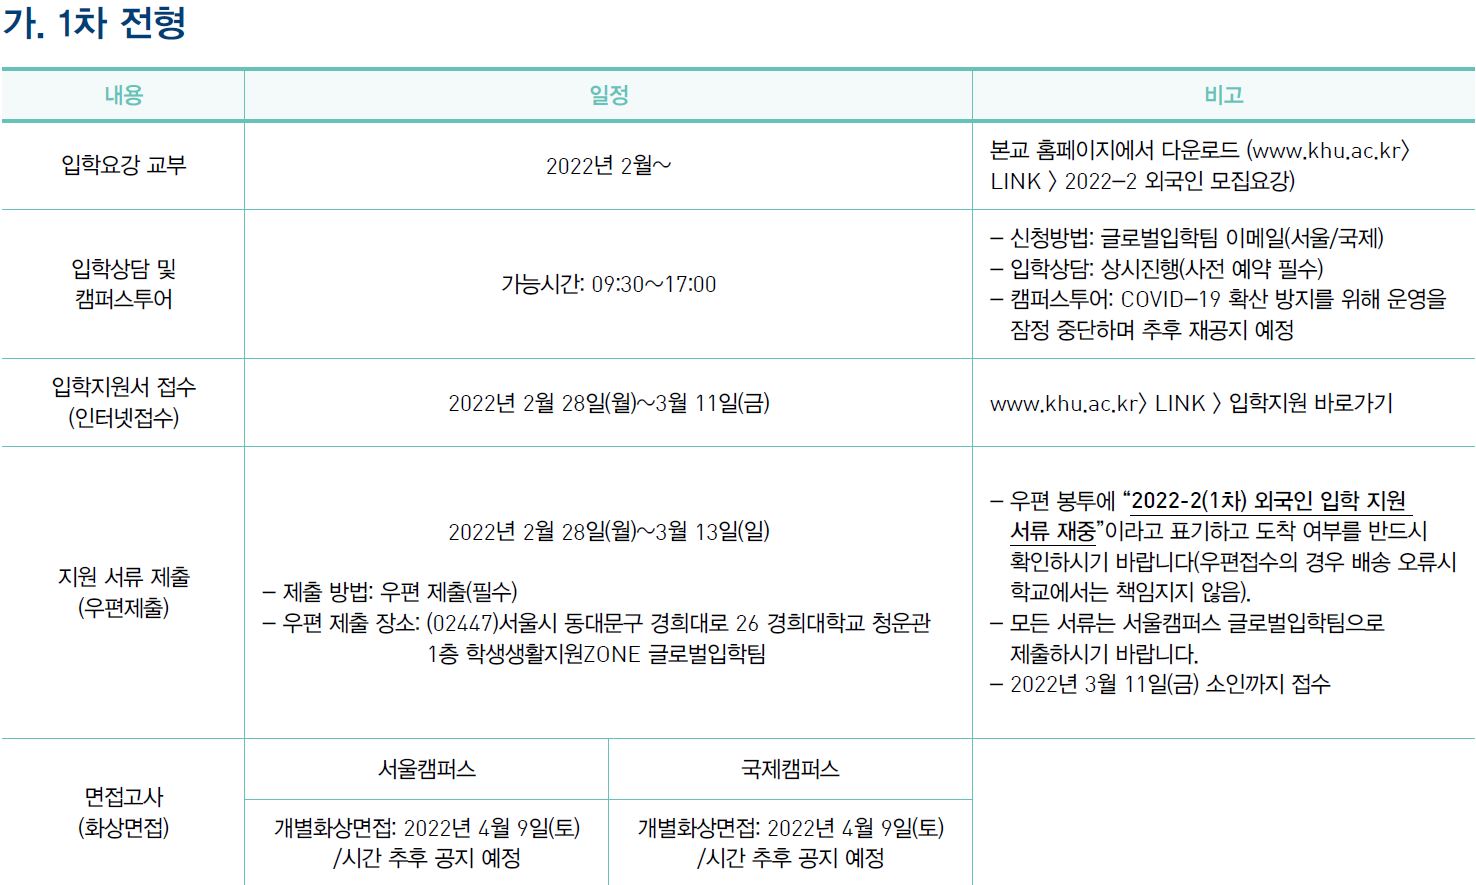 Kyung Hee University Foreign Student Admission Unit Eligibility Schedule_English Version 경희대 외국인전형 모집단위 지원자격 전형일정_영어본_09_전형일정_1차전형.JPG